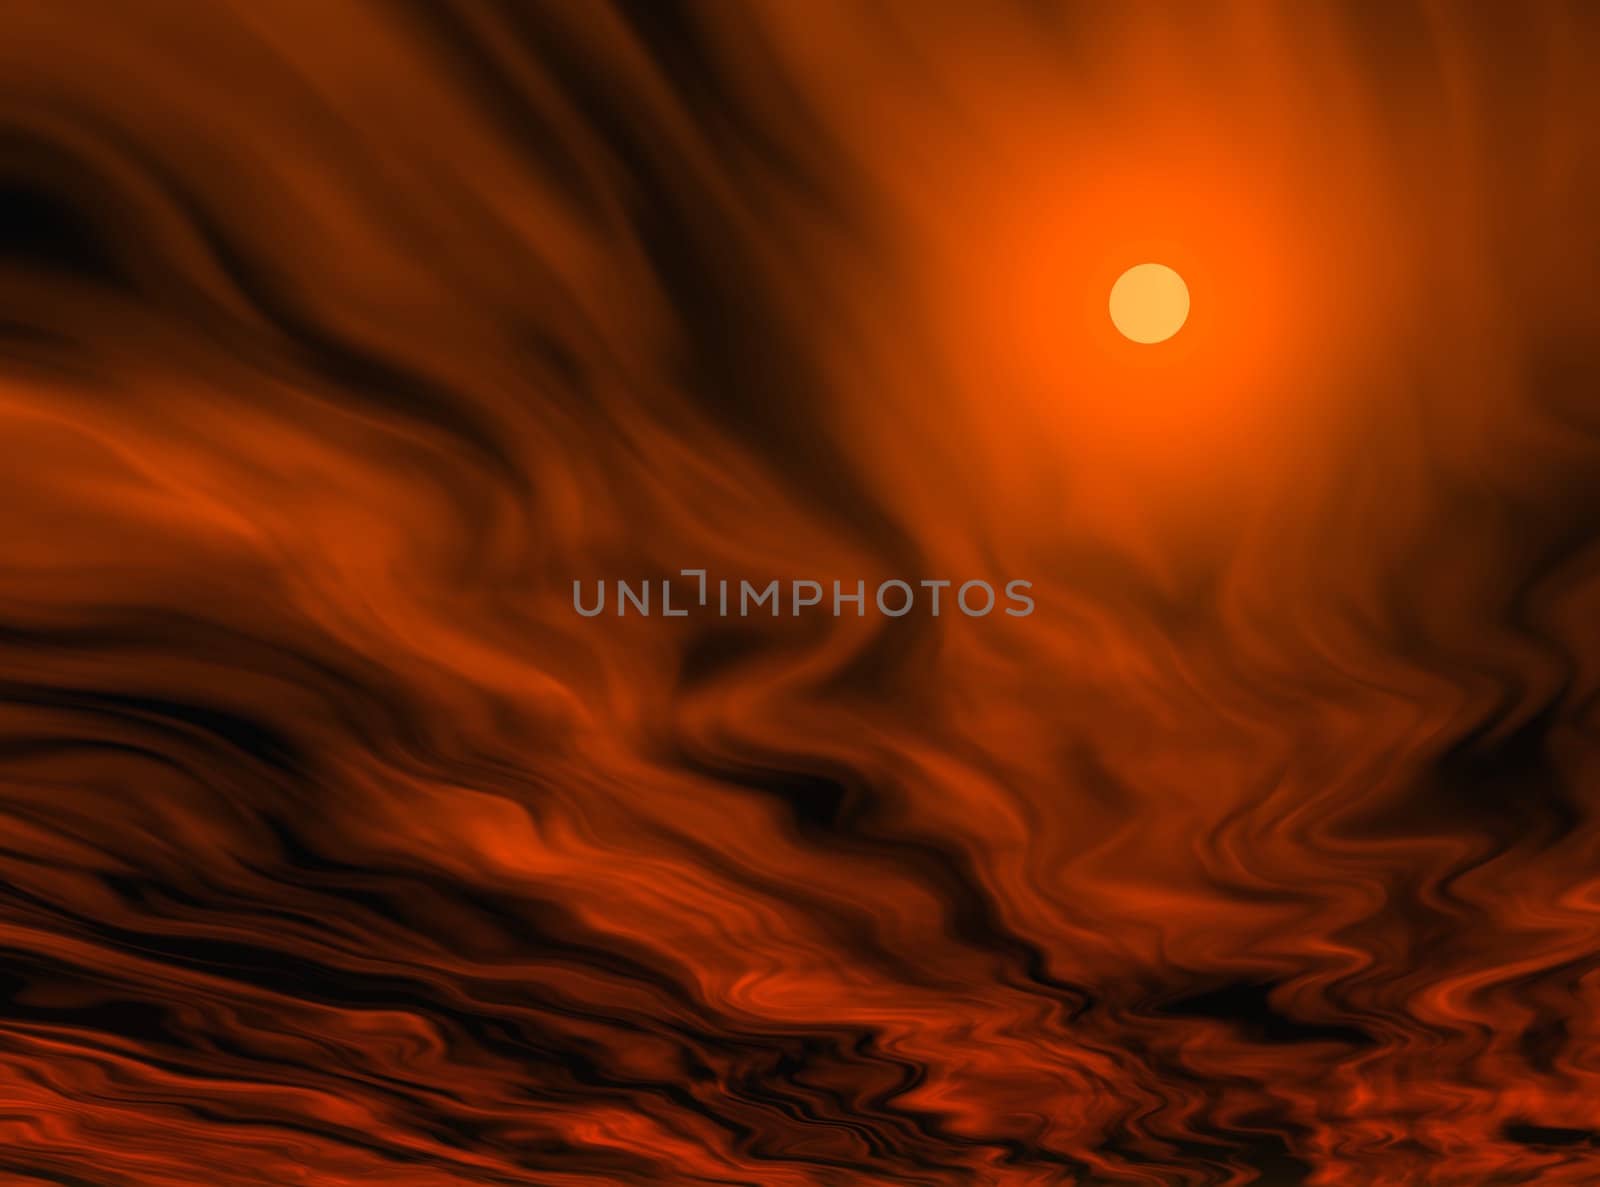 An illustration of a sun shining through an alien sky